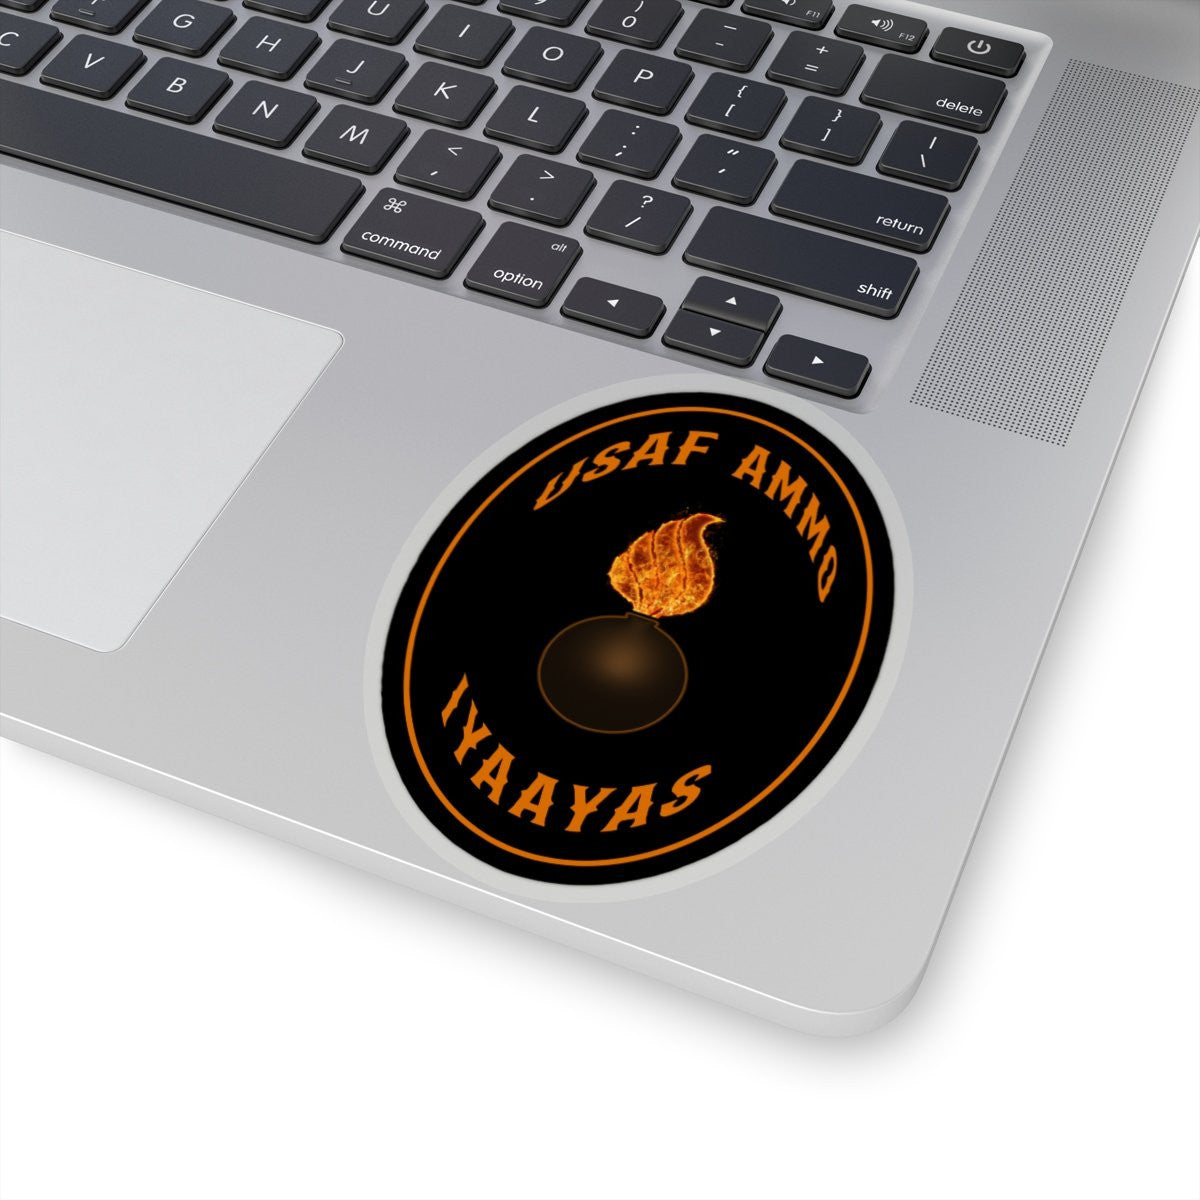 USAF AMMO Realistic Pisspot IYAAYAS Classic Oval Shaped Kiss-Cut Vinyl Sticker